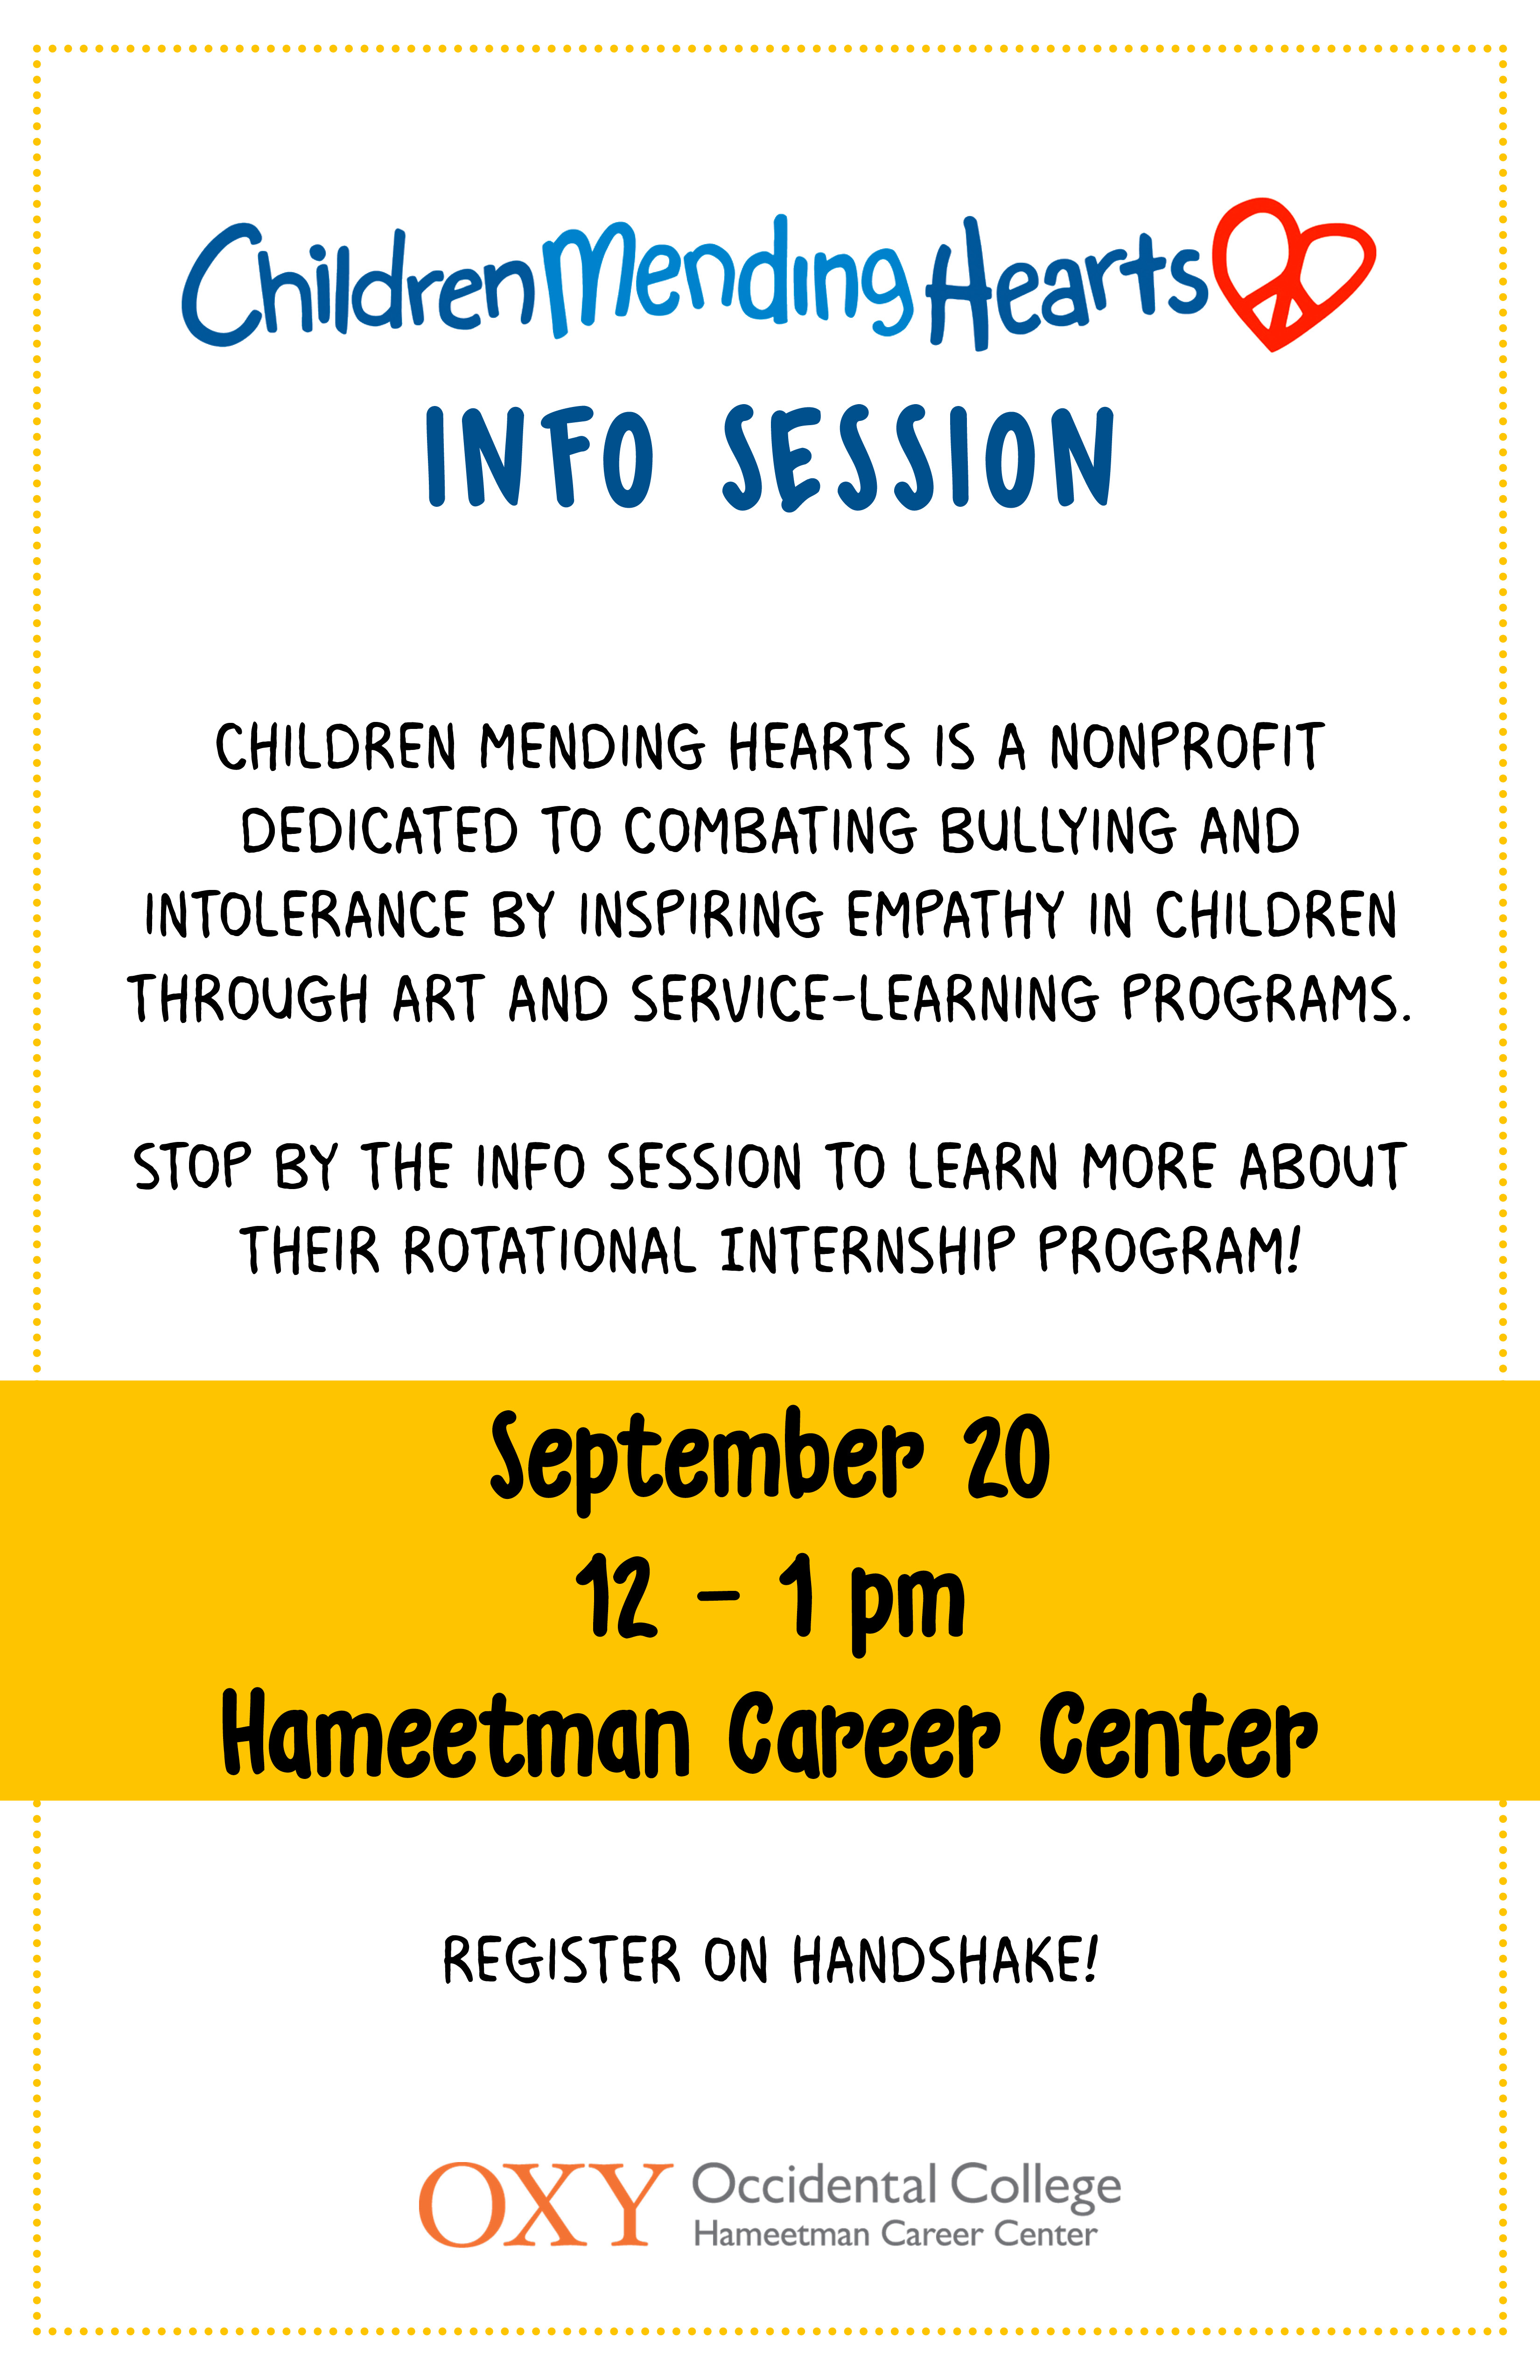 Image for Children Mending Hearts Info Session Event